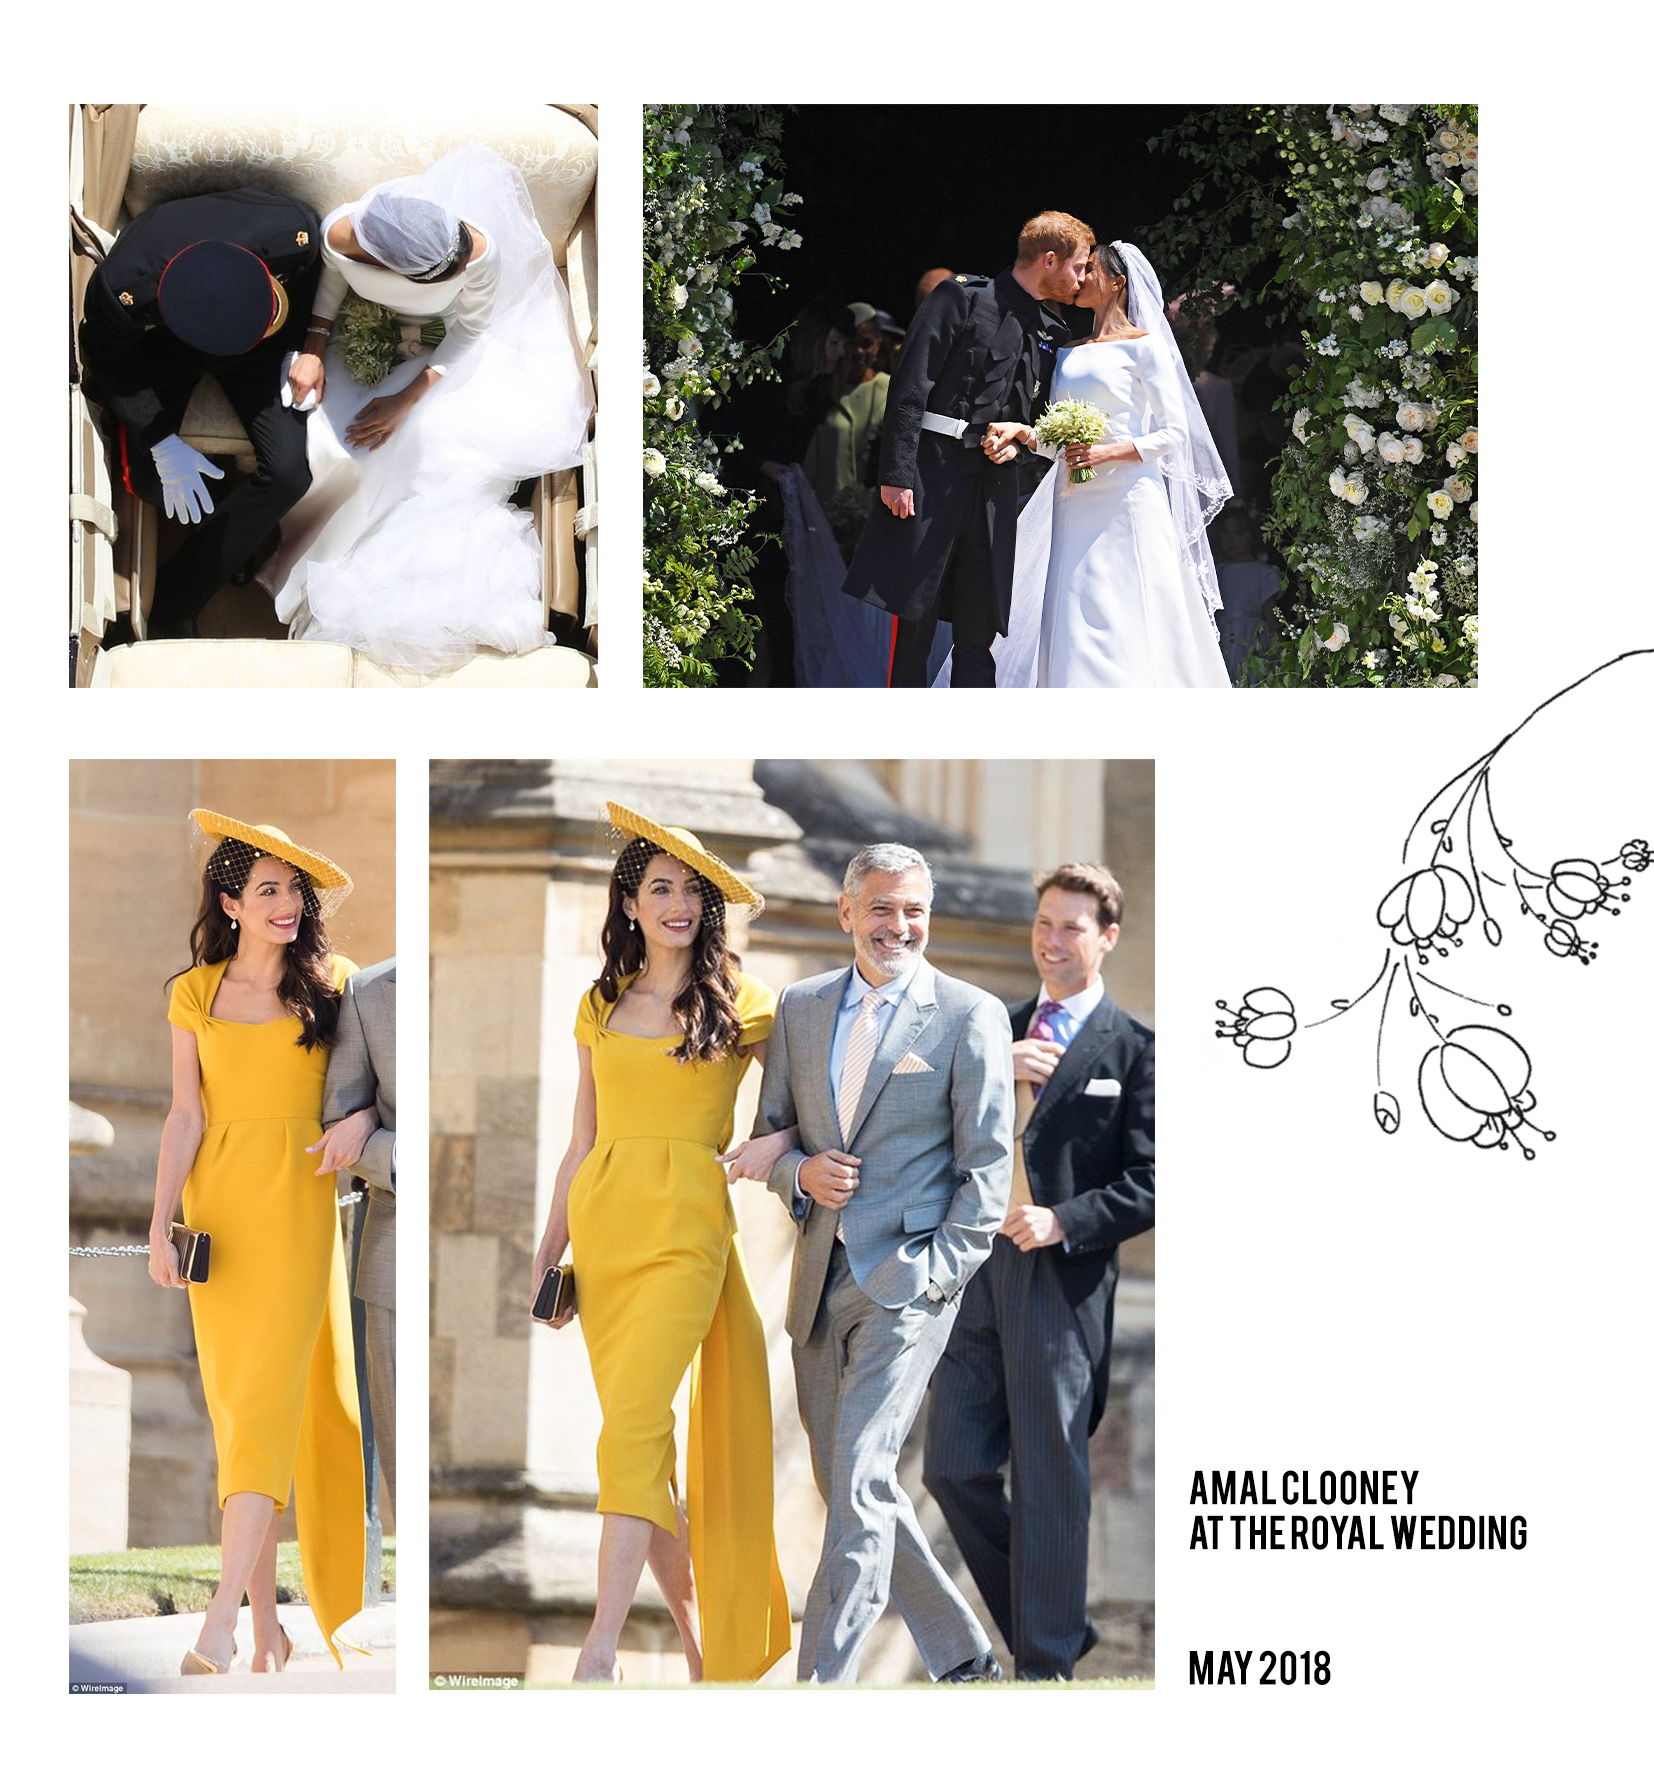 Amal Clooney in yellow dress at royal wedding 2018